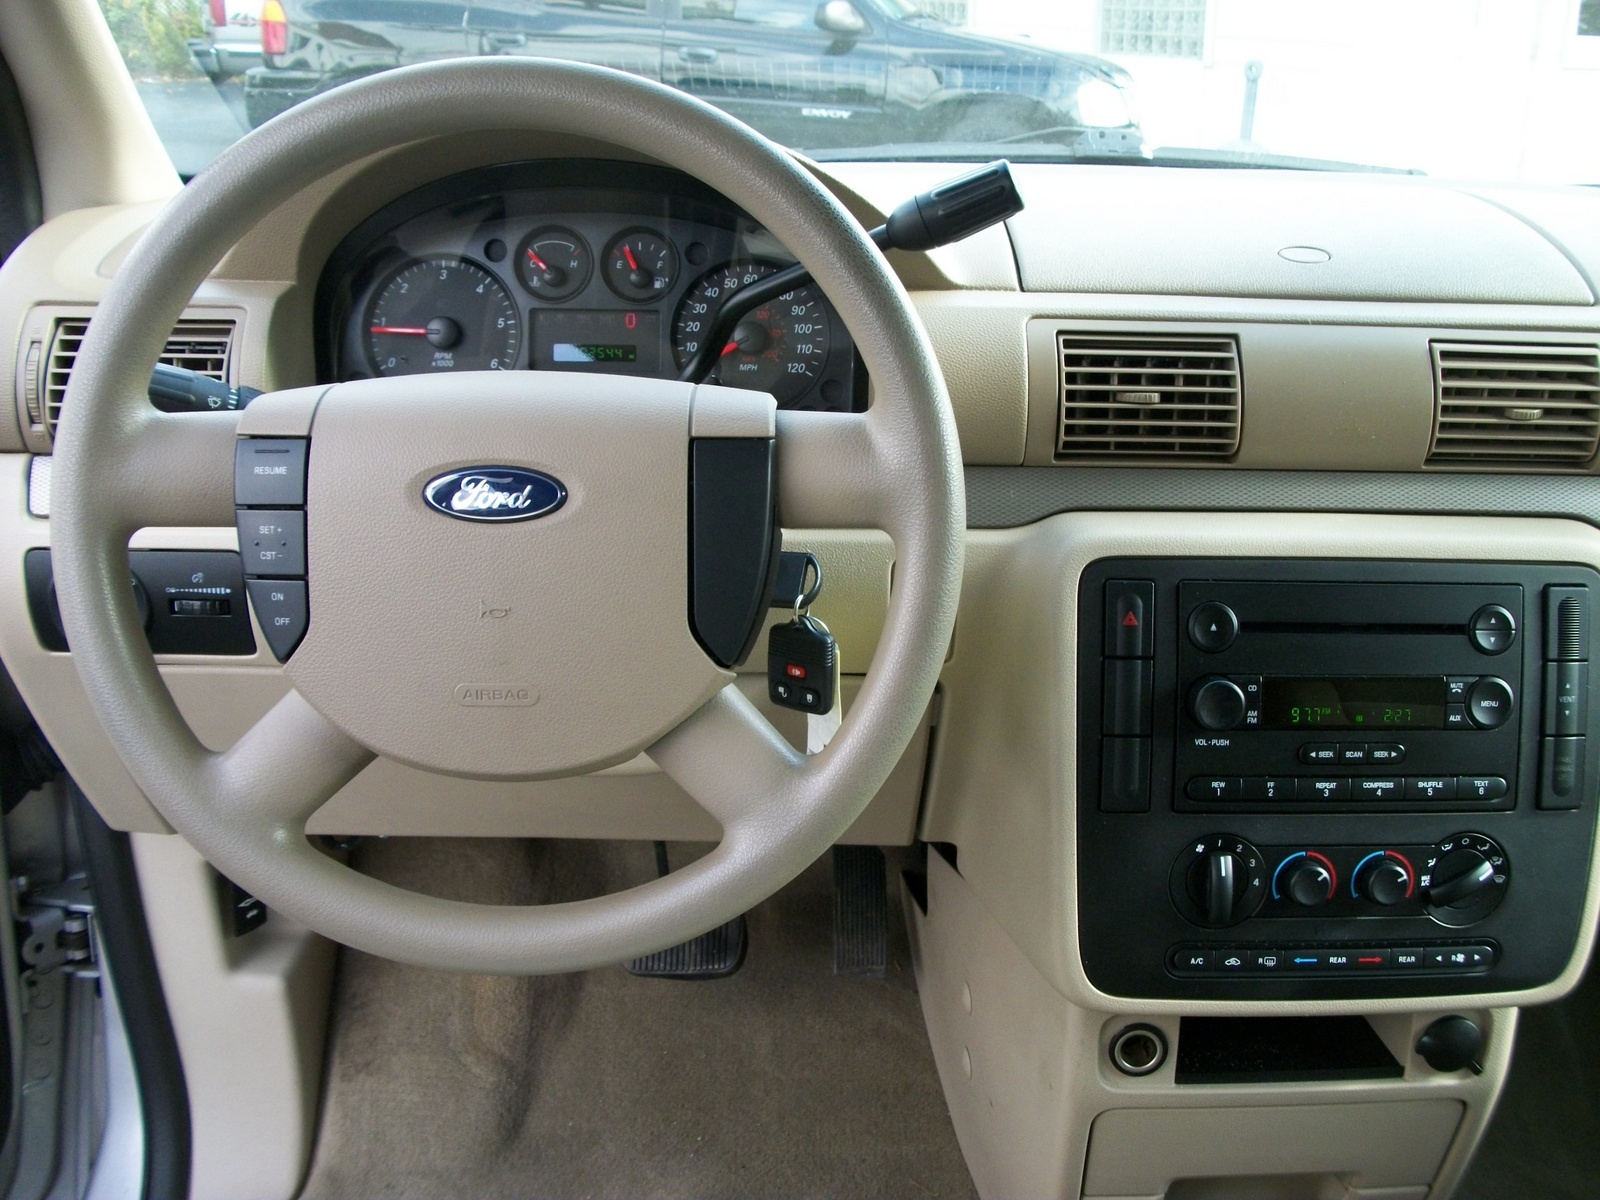 Ford freestar interior photos #2